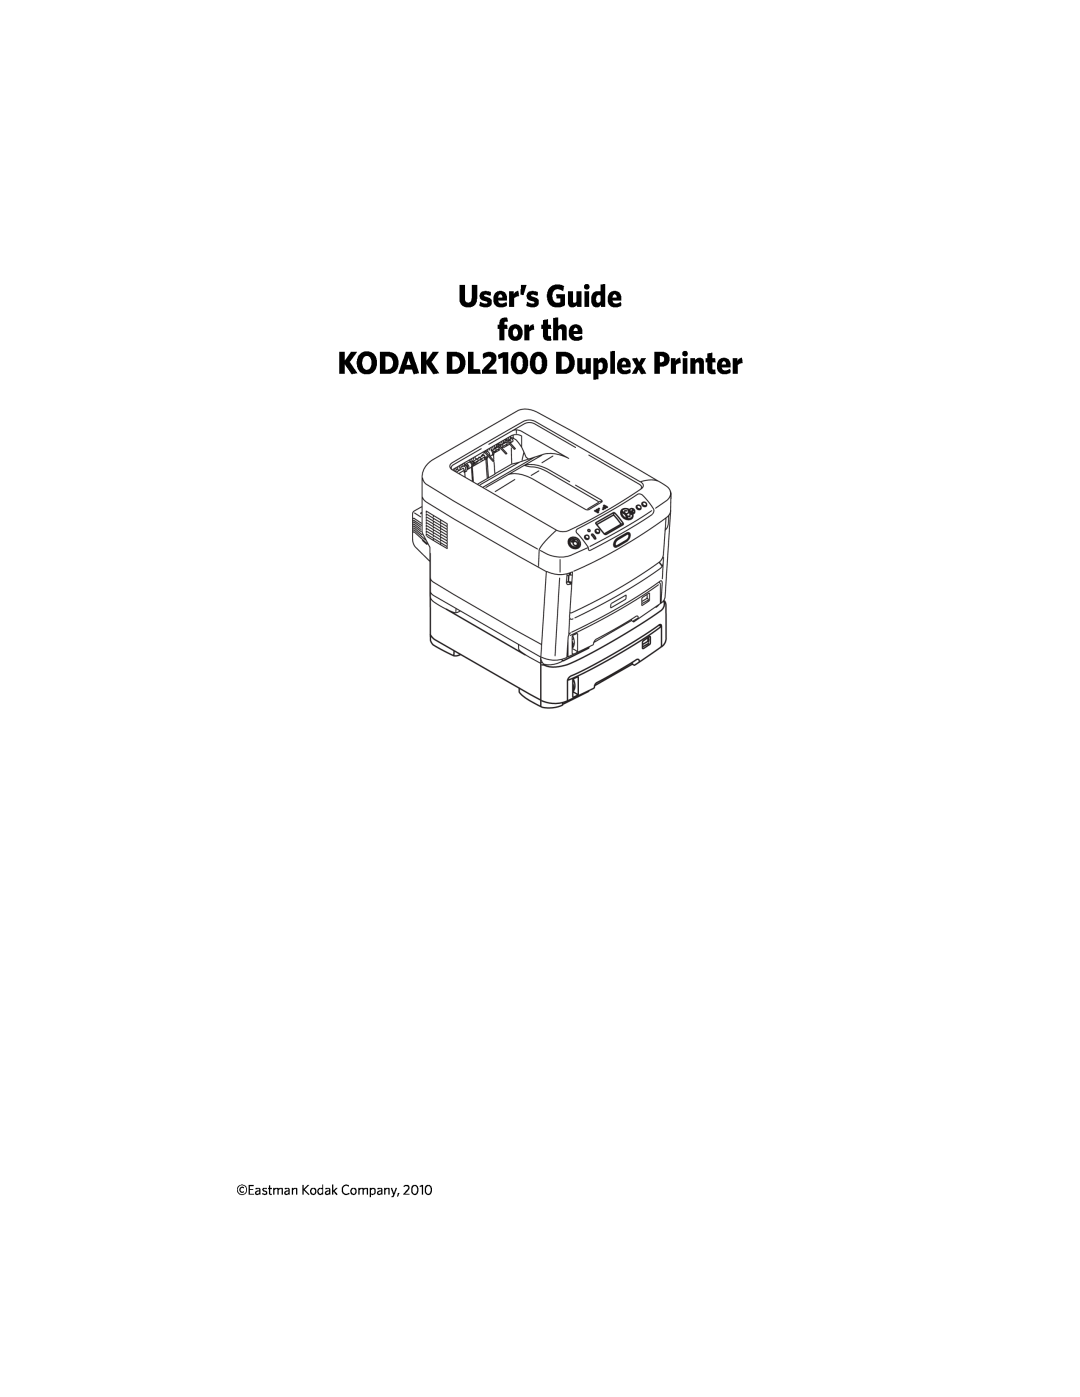 Kodak manual User’s Guide for the KODAK DL2100 Duplex Printer, Eastman Kodak Company 